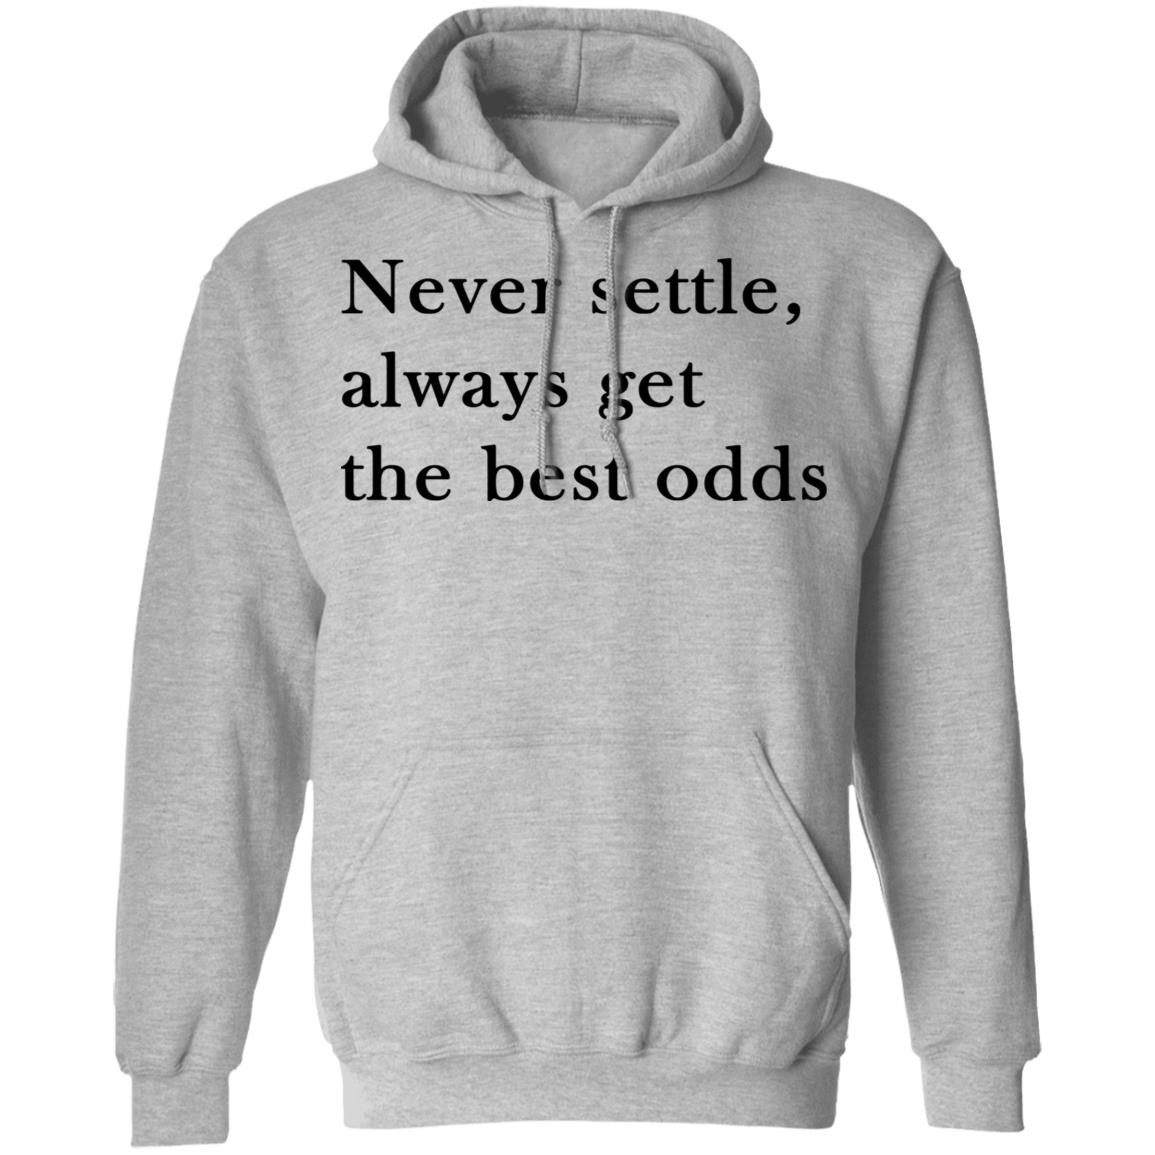 Never settle, always get the best odds shirt